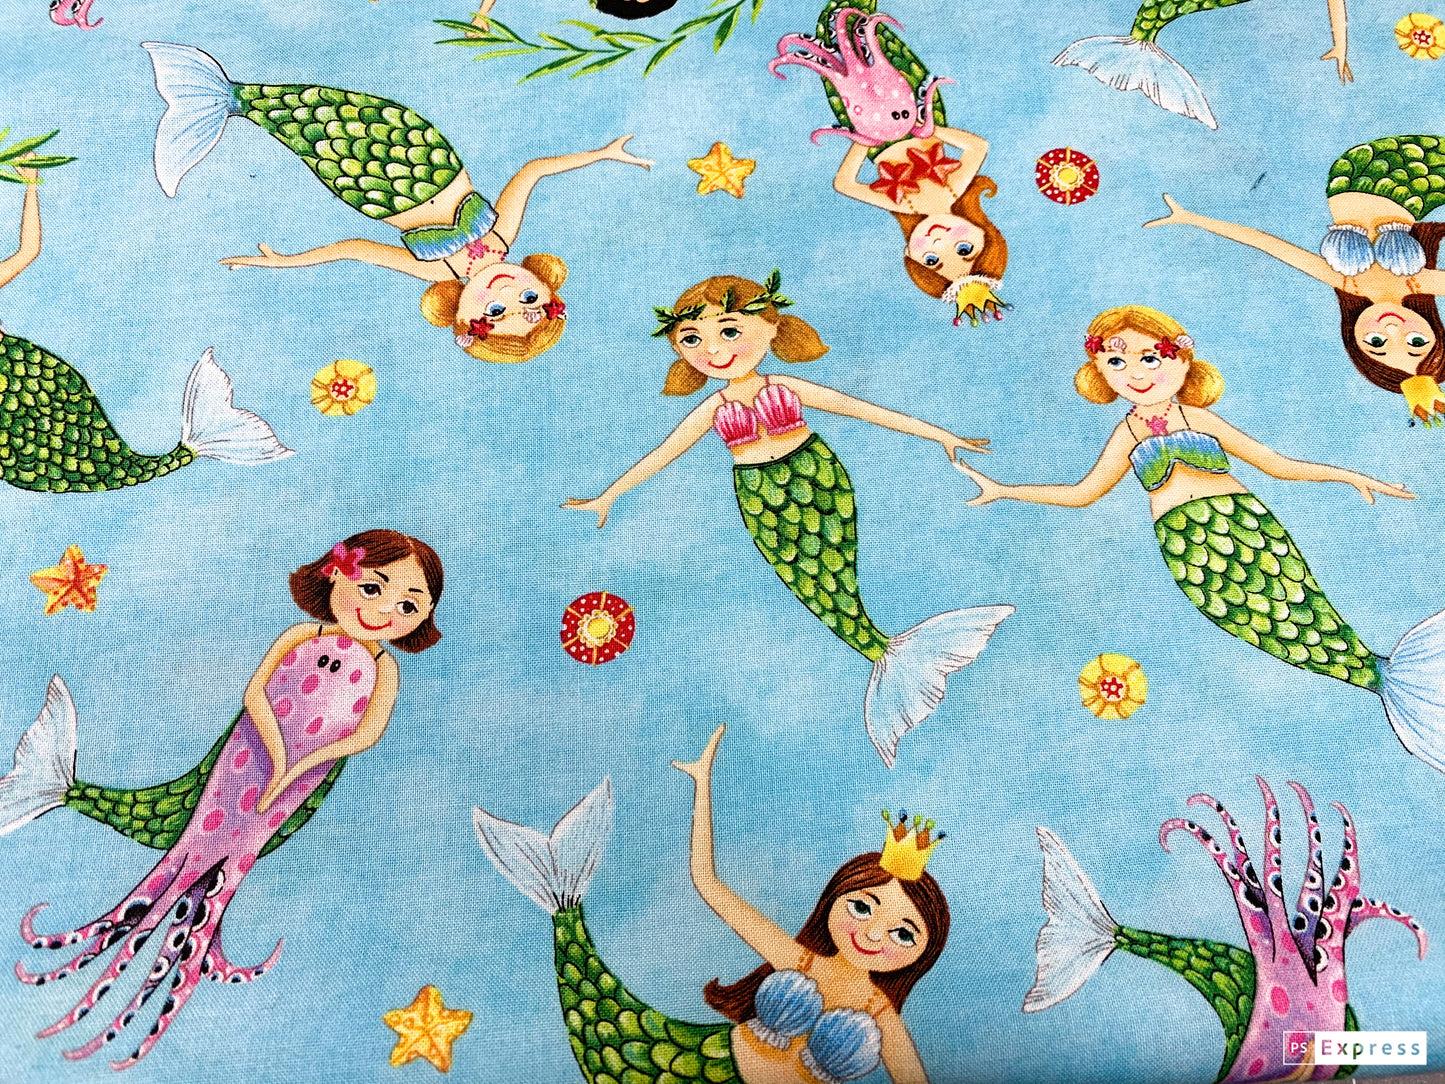 Cute Mermaid fabric 17003 Mermaids playing in the ocean fabric